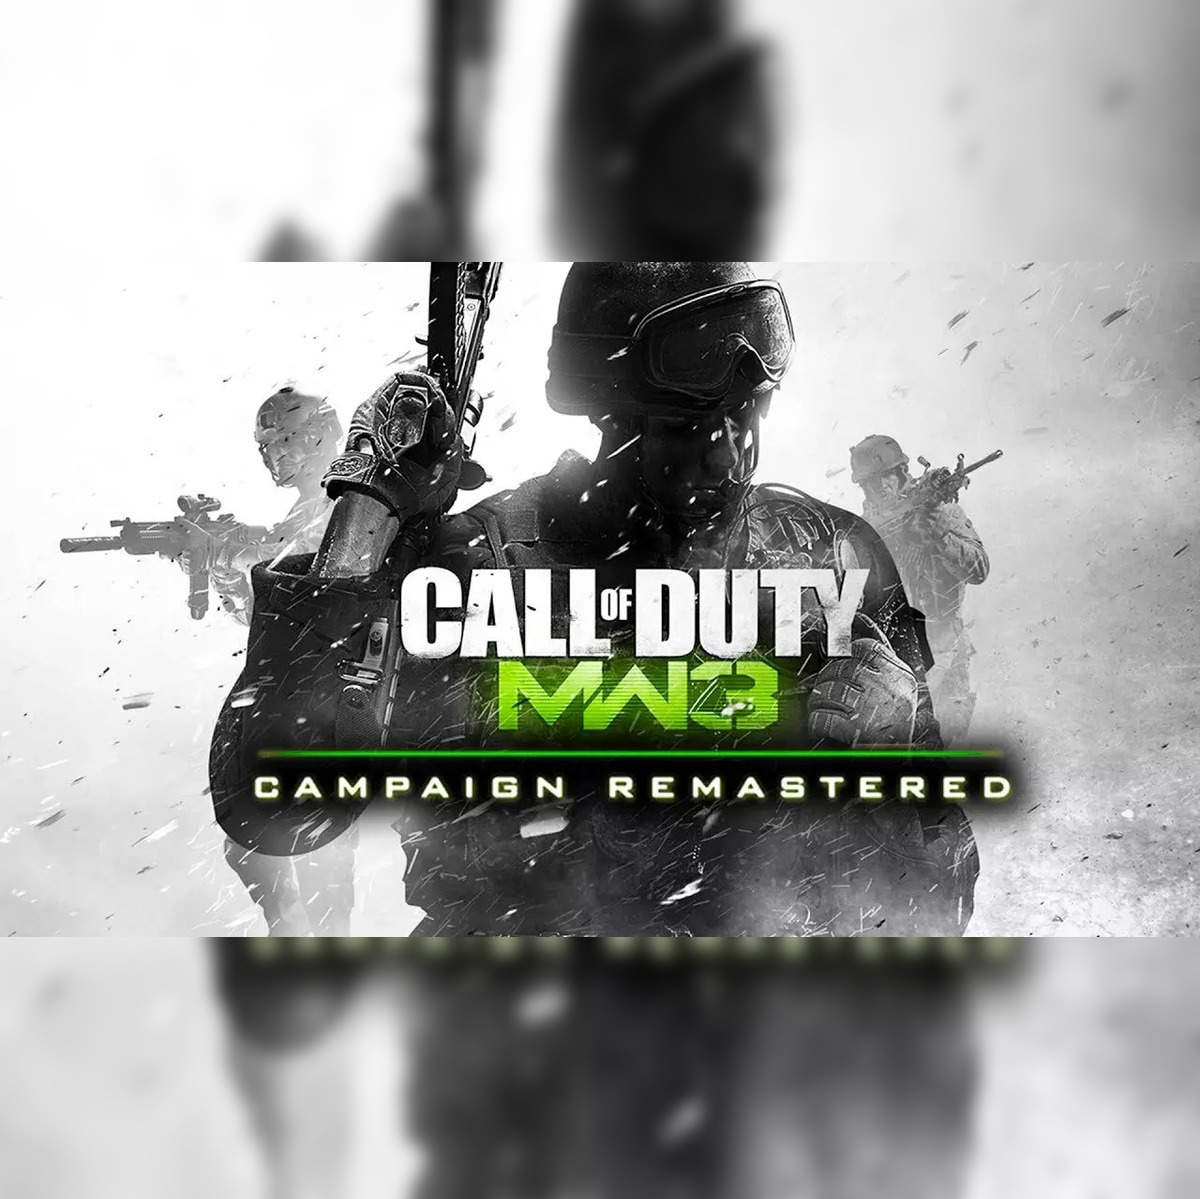 Call Of Duty: Modern Warfare 3 Release Date November 10 Teaser